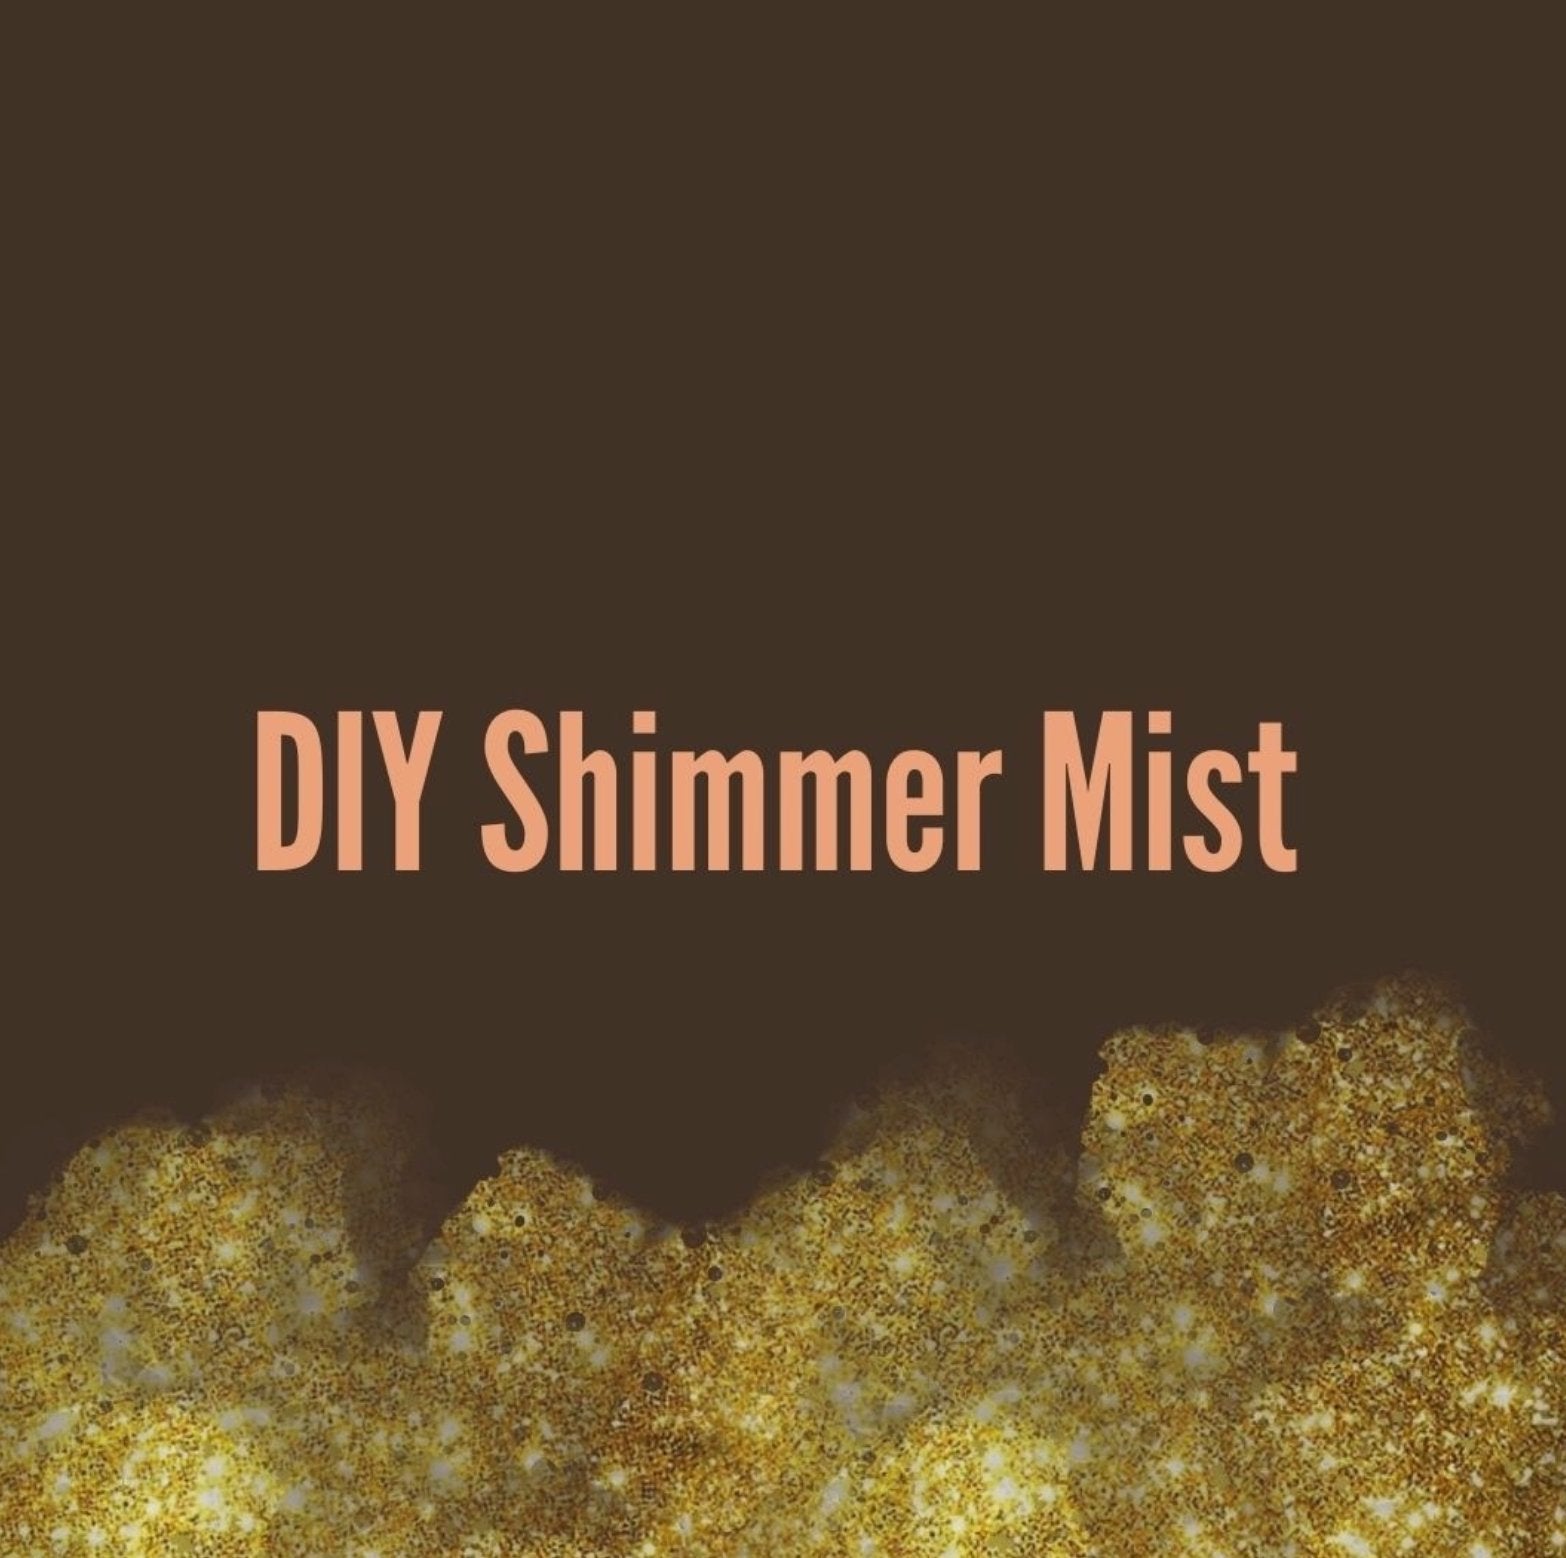 DIY Shimmer Mist Spray - The SkinScience Company